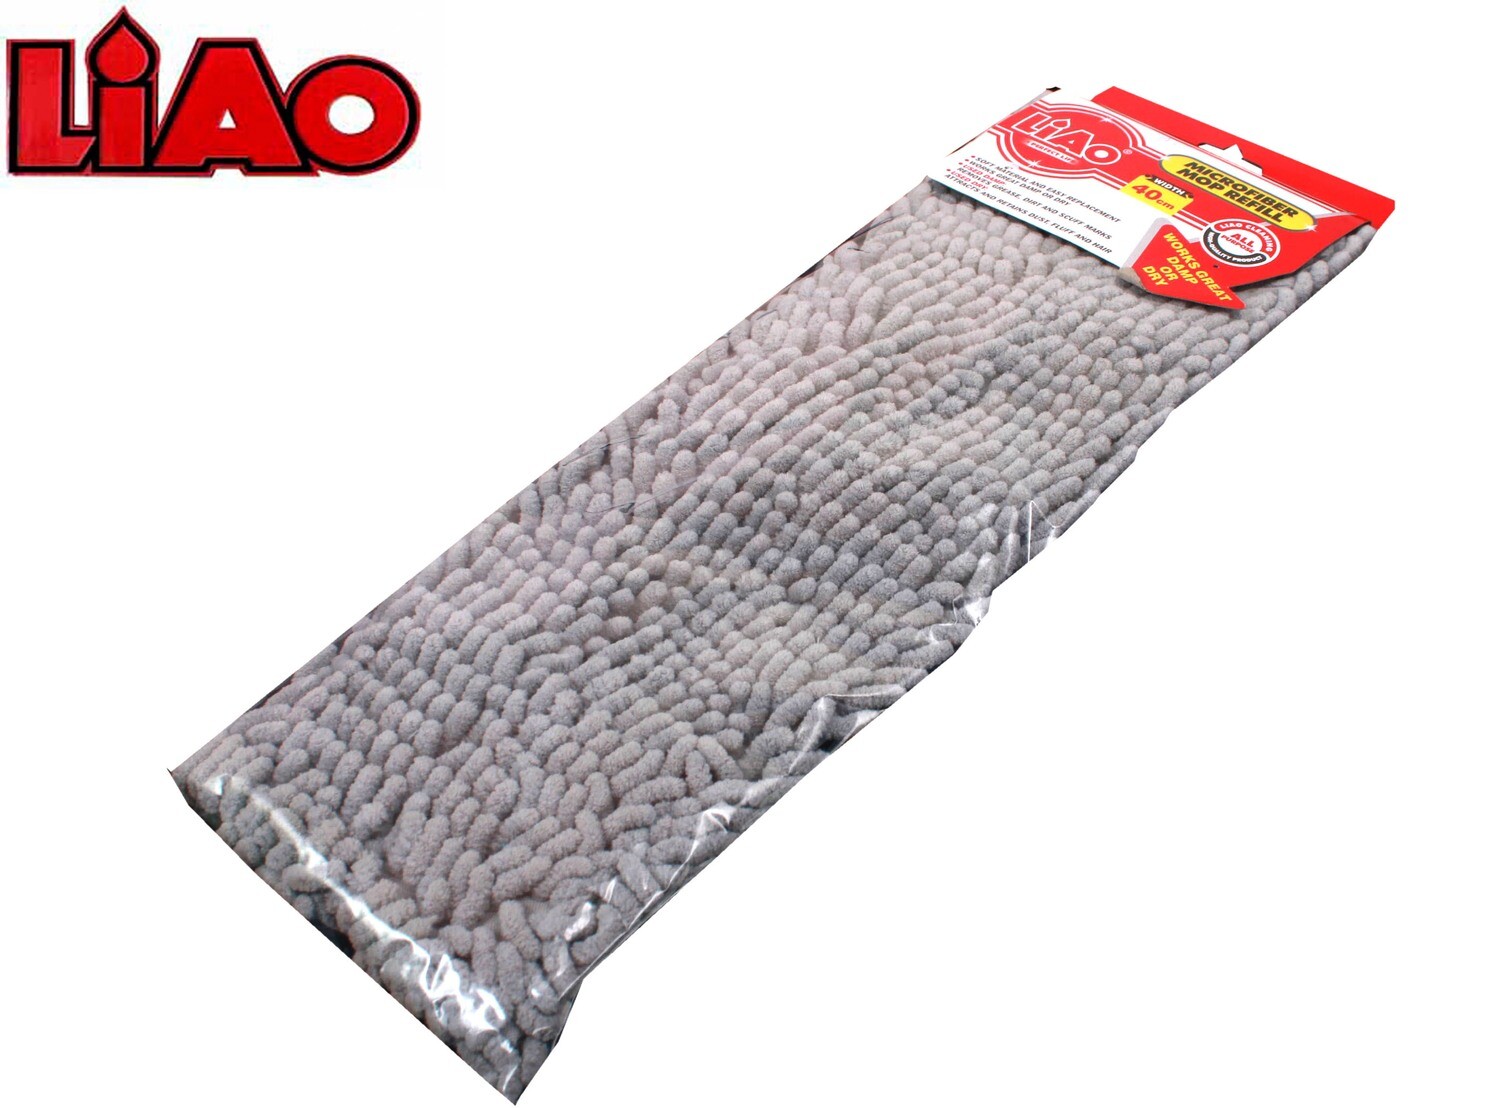 Liao հատակի մաքրիչի շոր թրթուրաձև(синель)  40սմ-ի